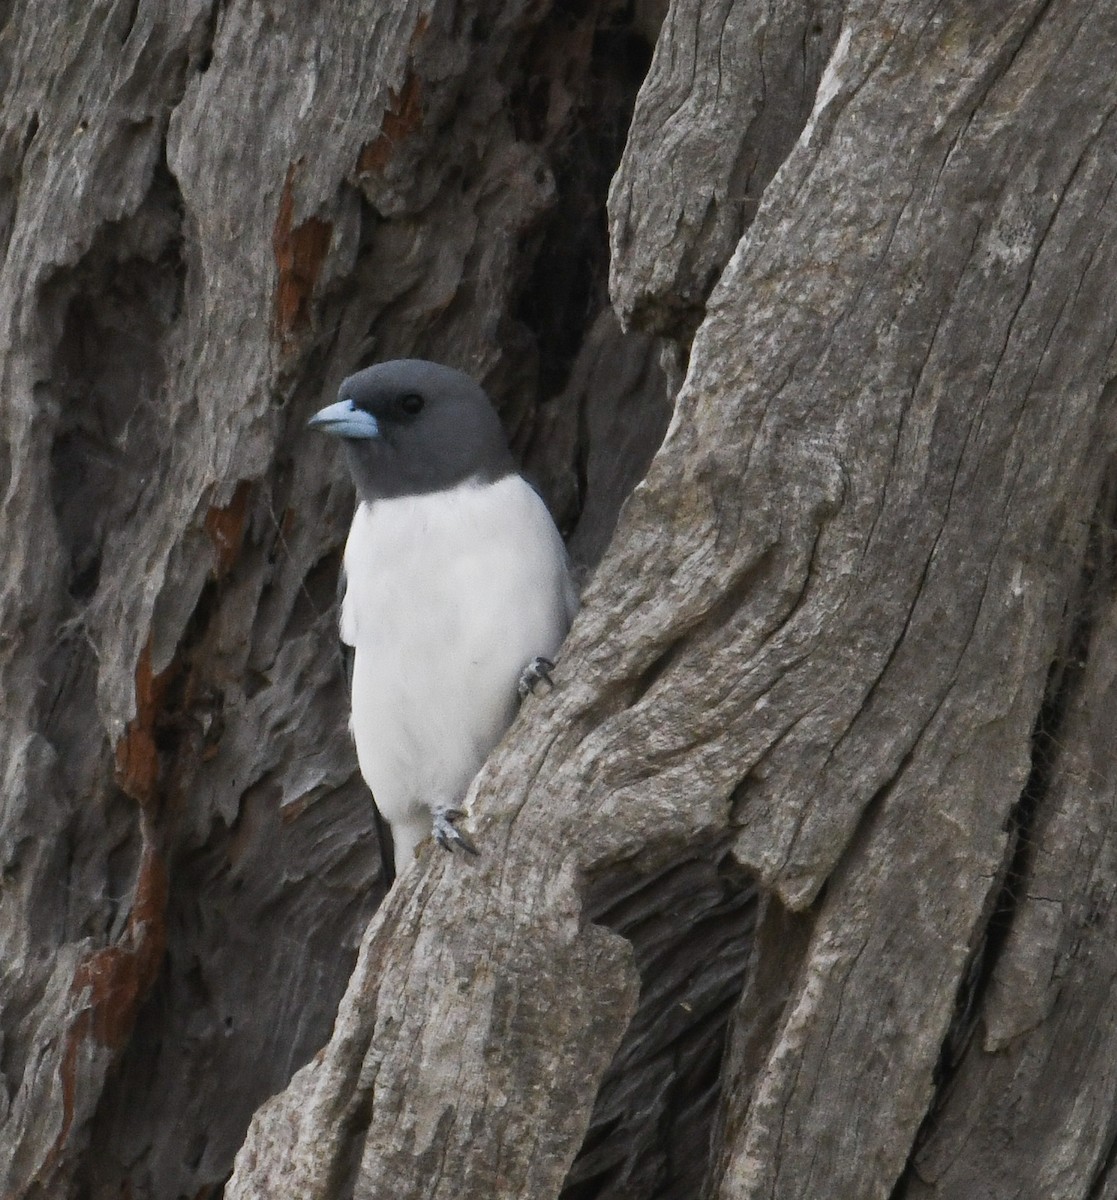 White-breasted Woodswallow - Nicholas Talbot